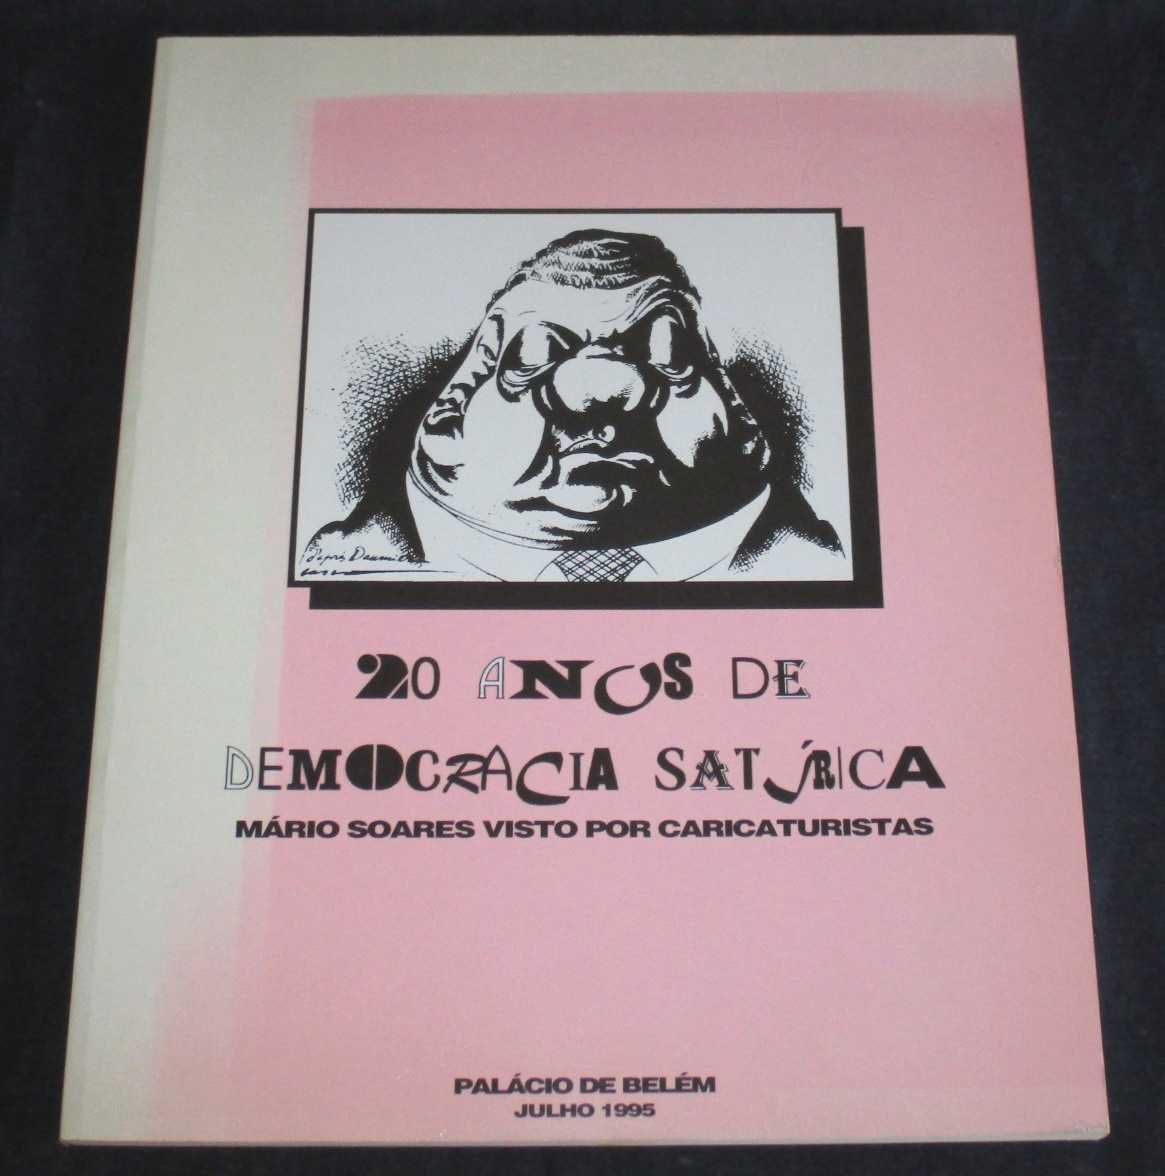 Livro 20 Anos de Democracia Satírica Mário Soares visto caricaturistas